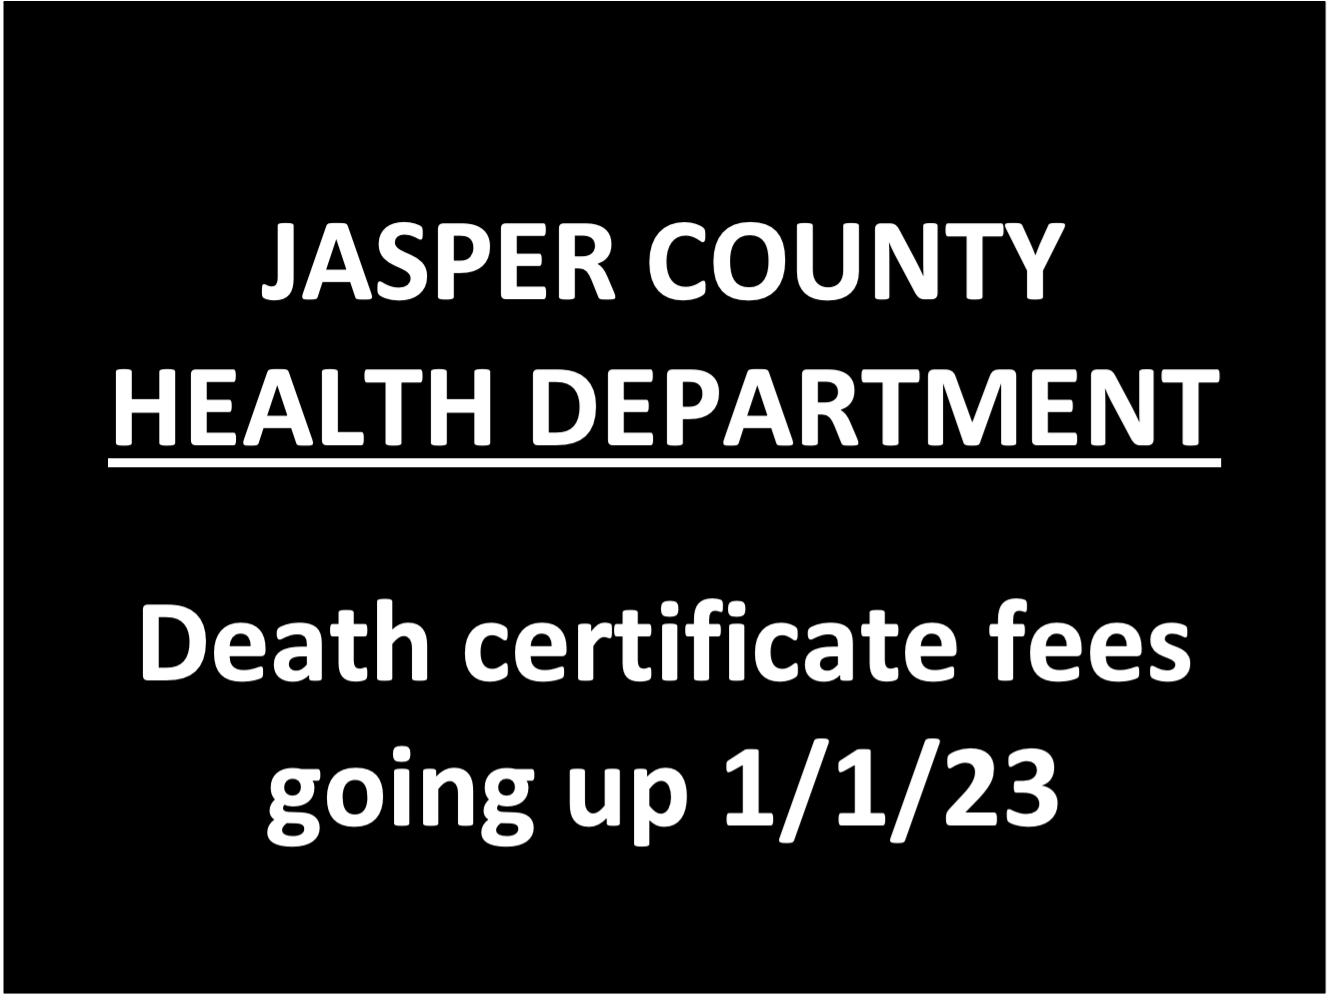 Jasper County death certificate fees